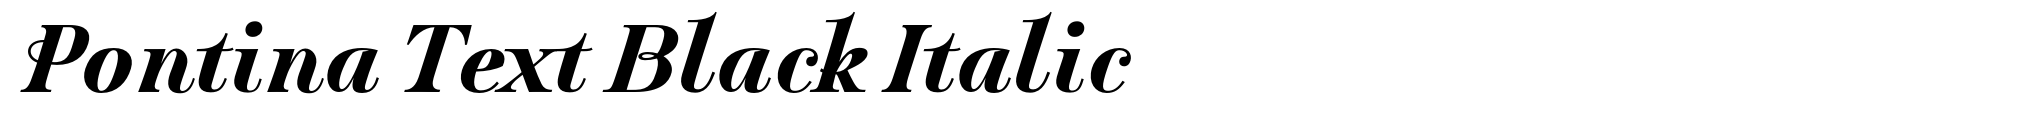 Pontina Text Black Italic image